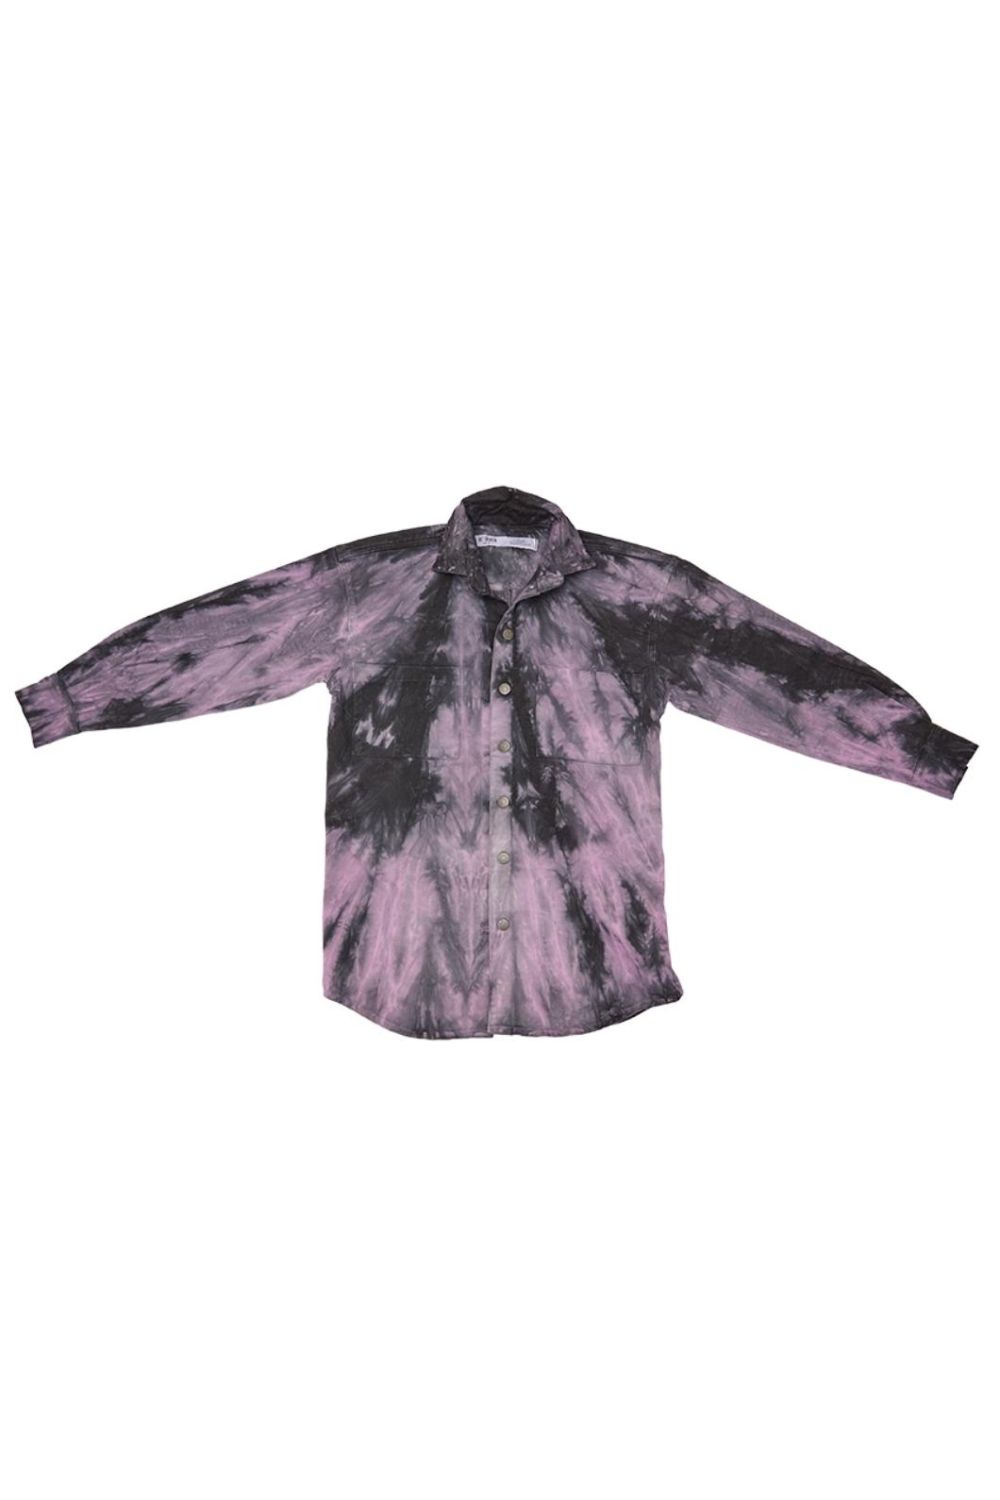 Denim Jacket Alexa Chung Tie Dye Black Purple 